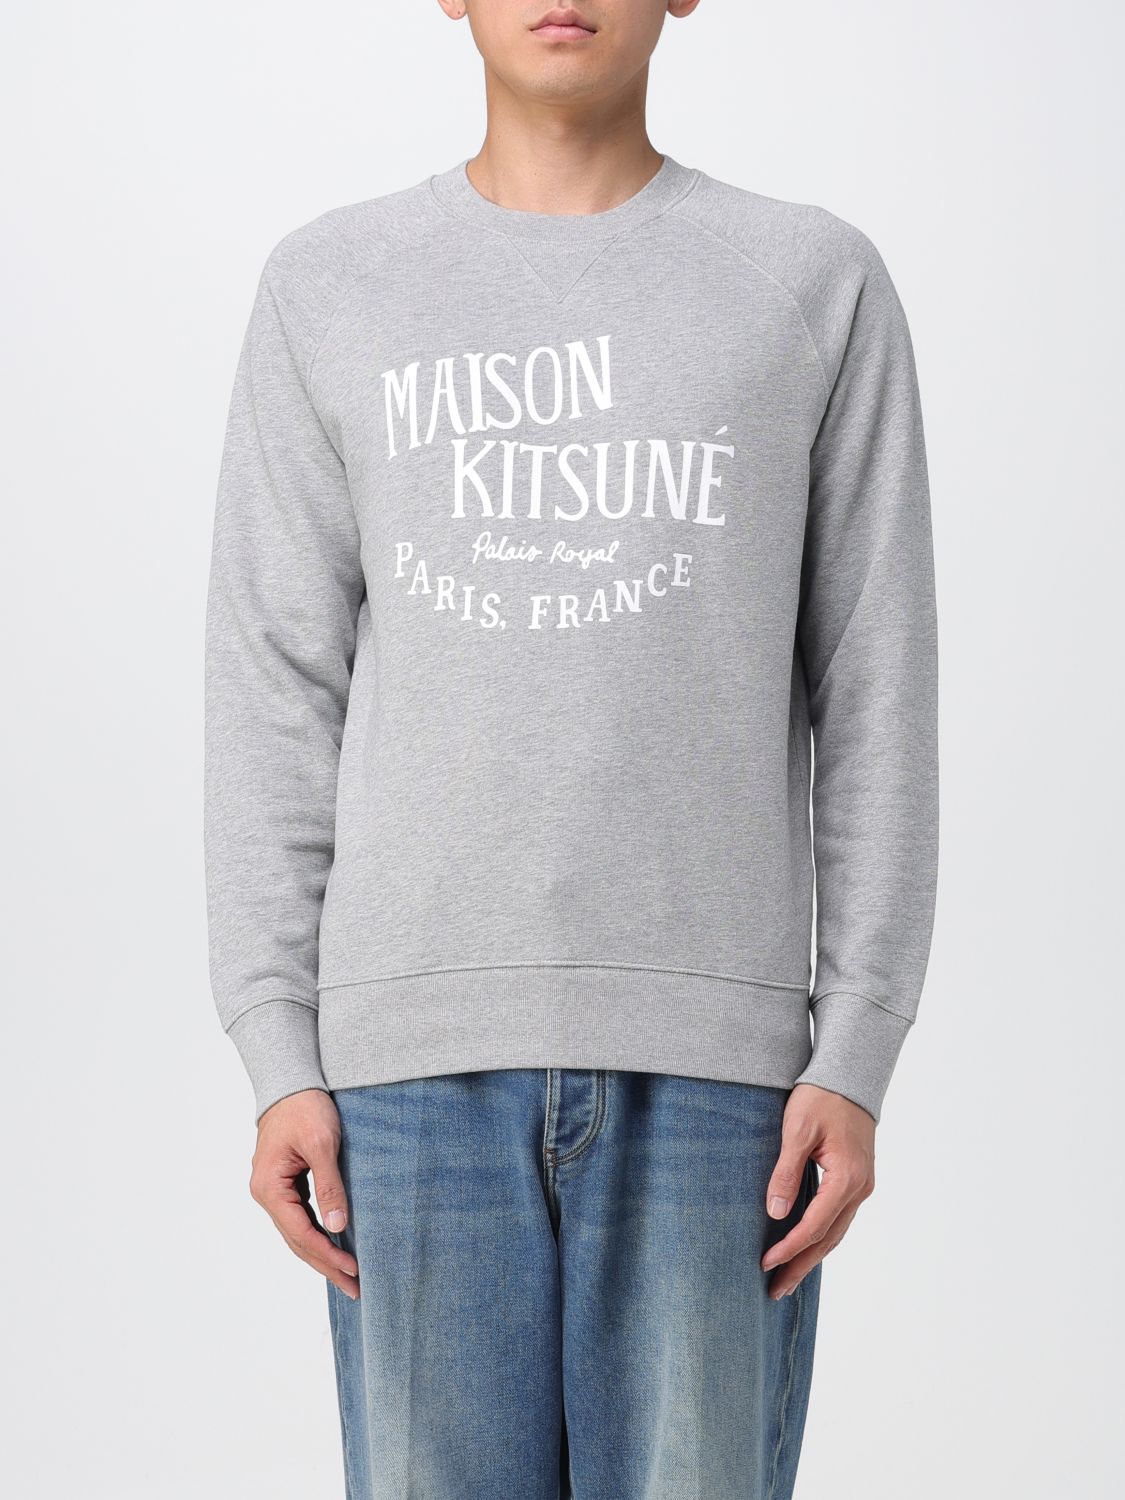 Maison Kitsuné Cotton Sweatshirt In Grey